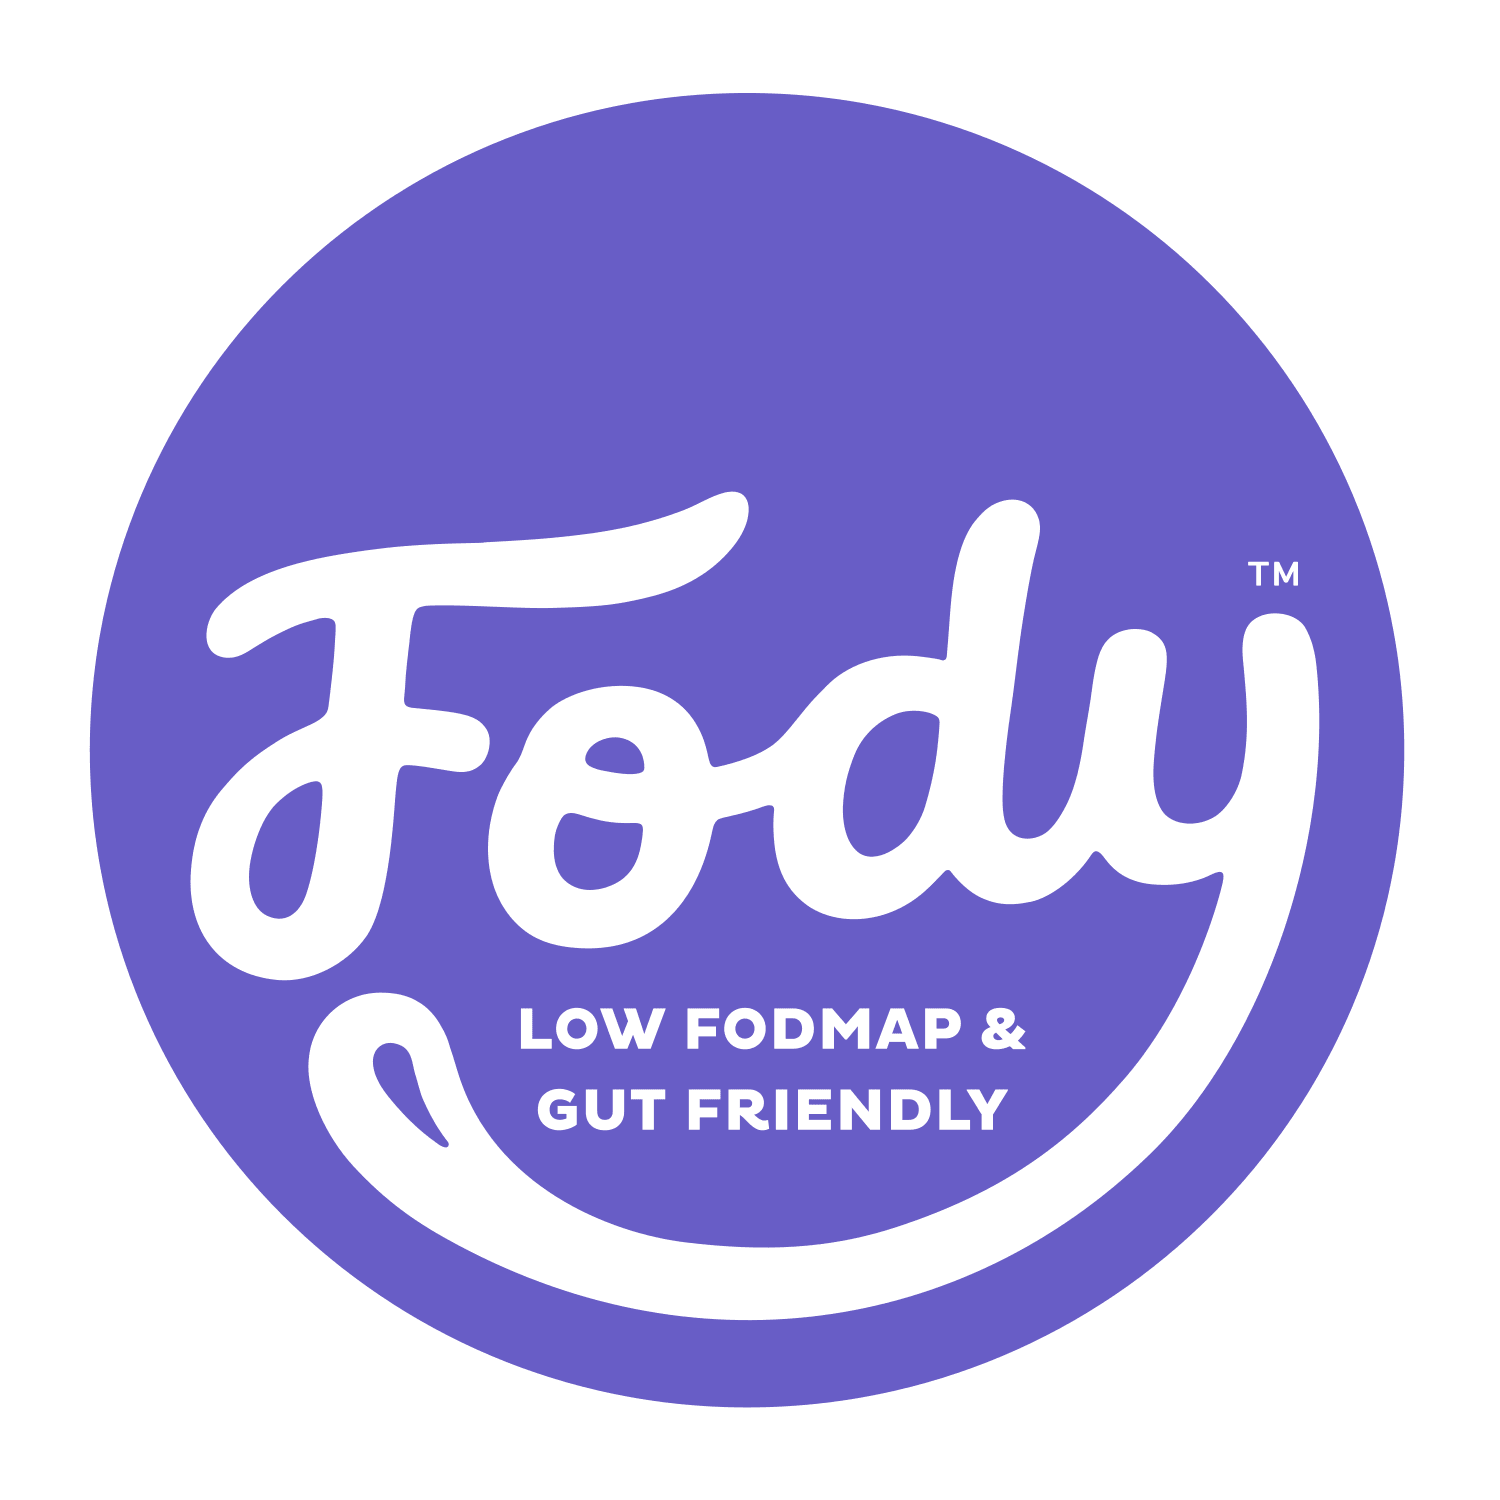 Fody Food Co